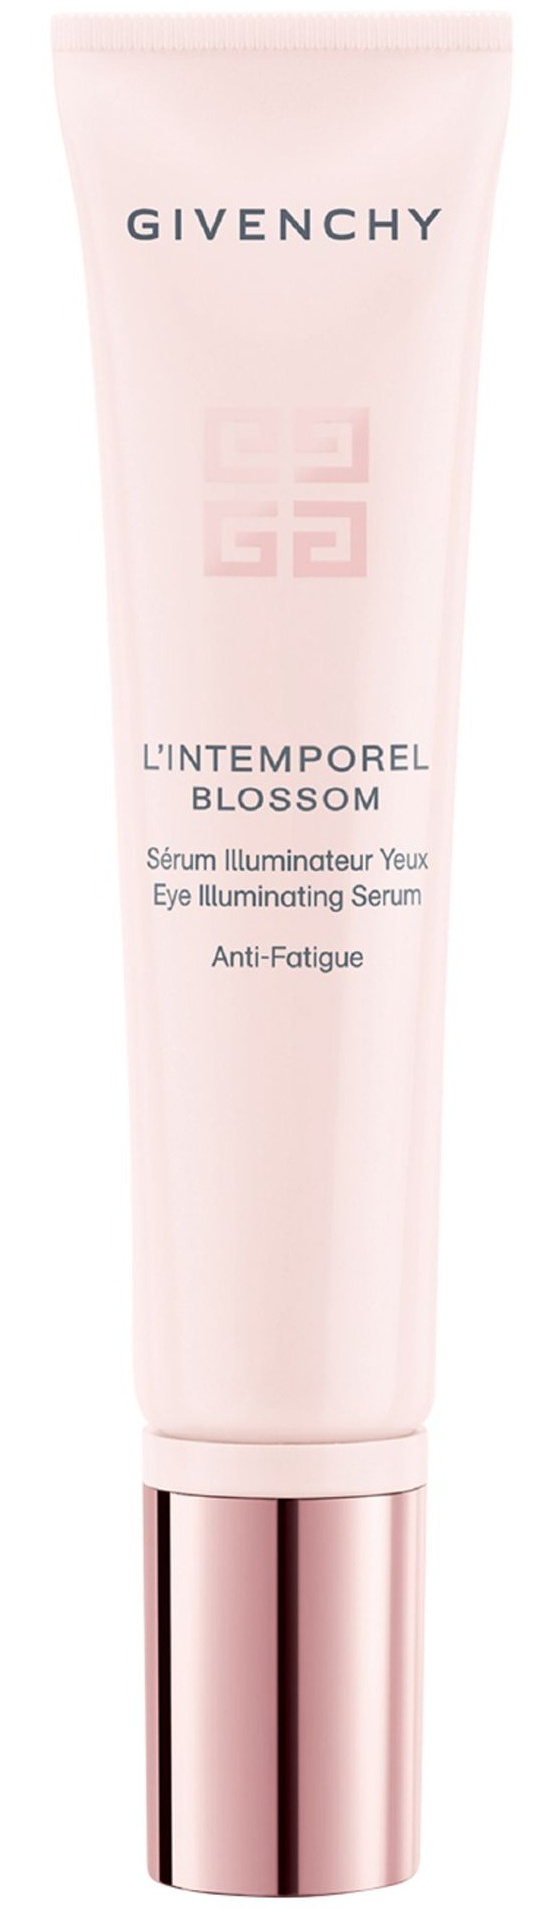 Givenchy L'Intemporel Blossom Eye Illuminating Serum Anti-Fatigue